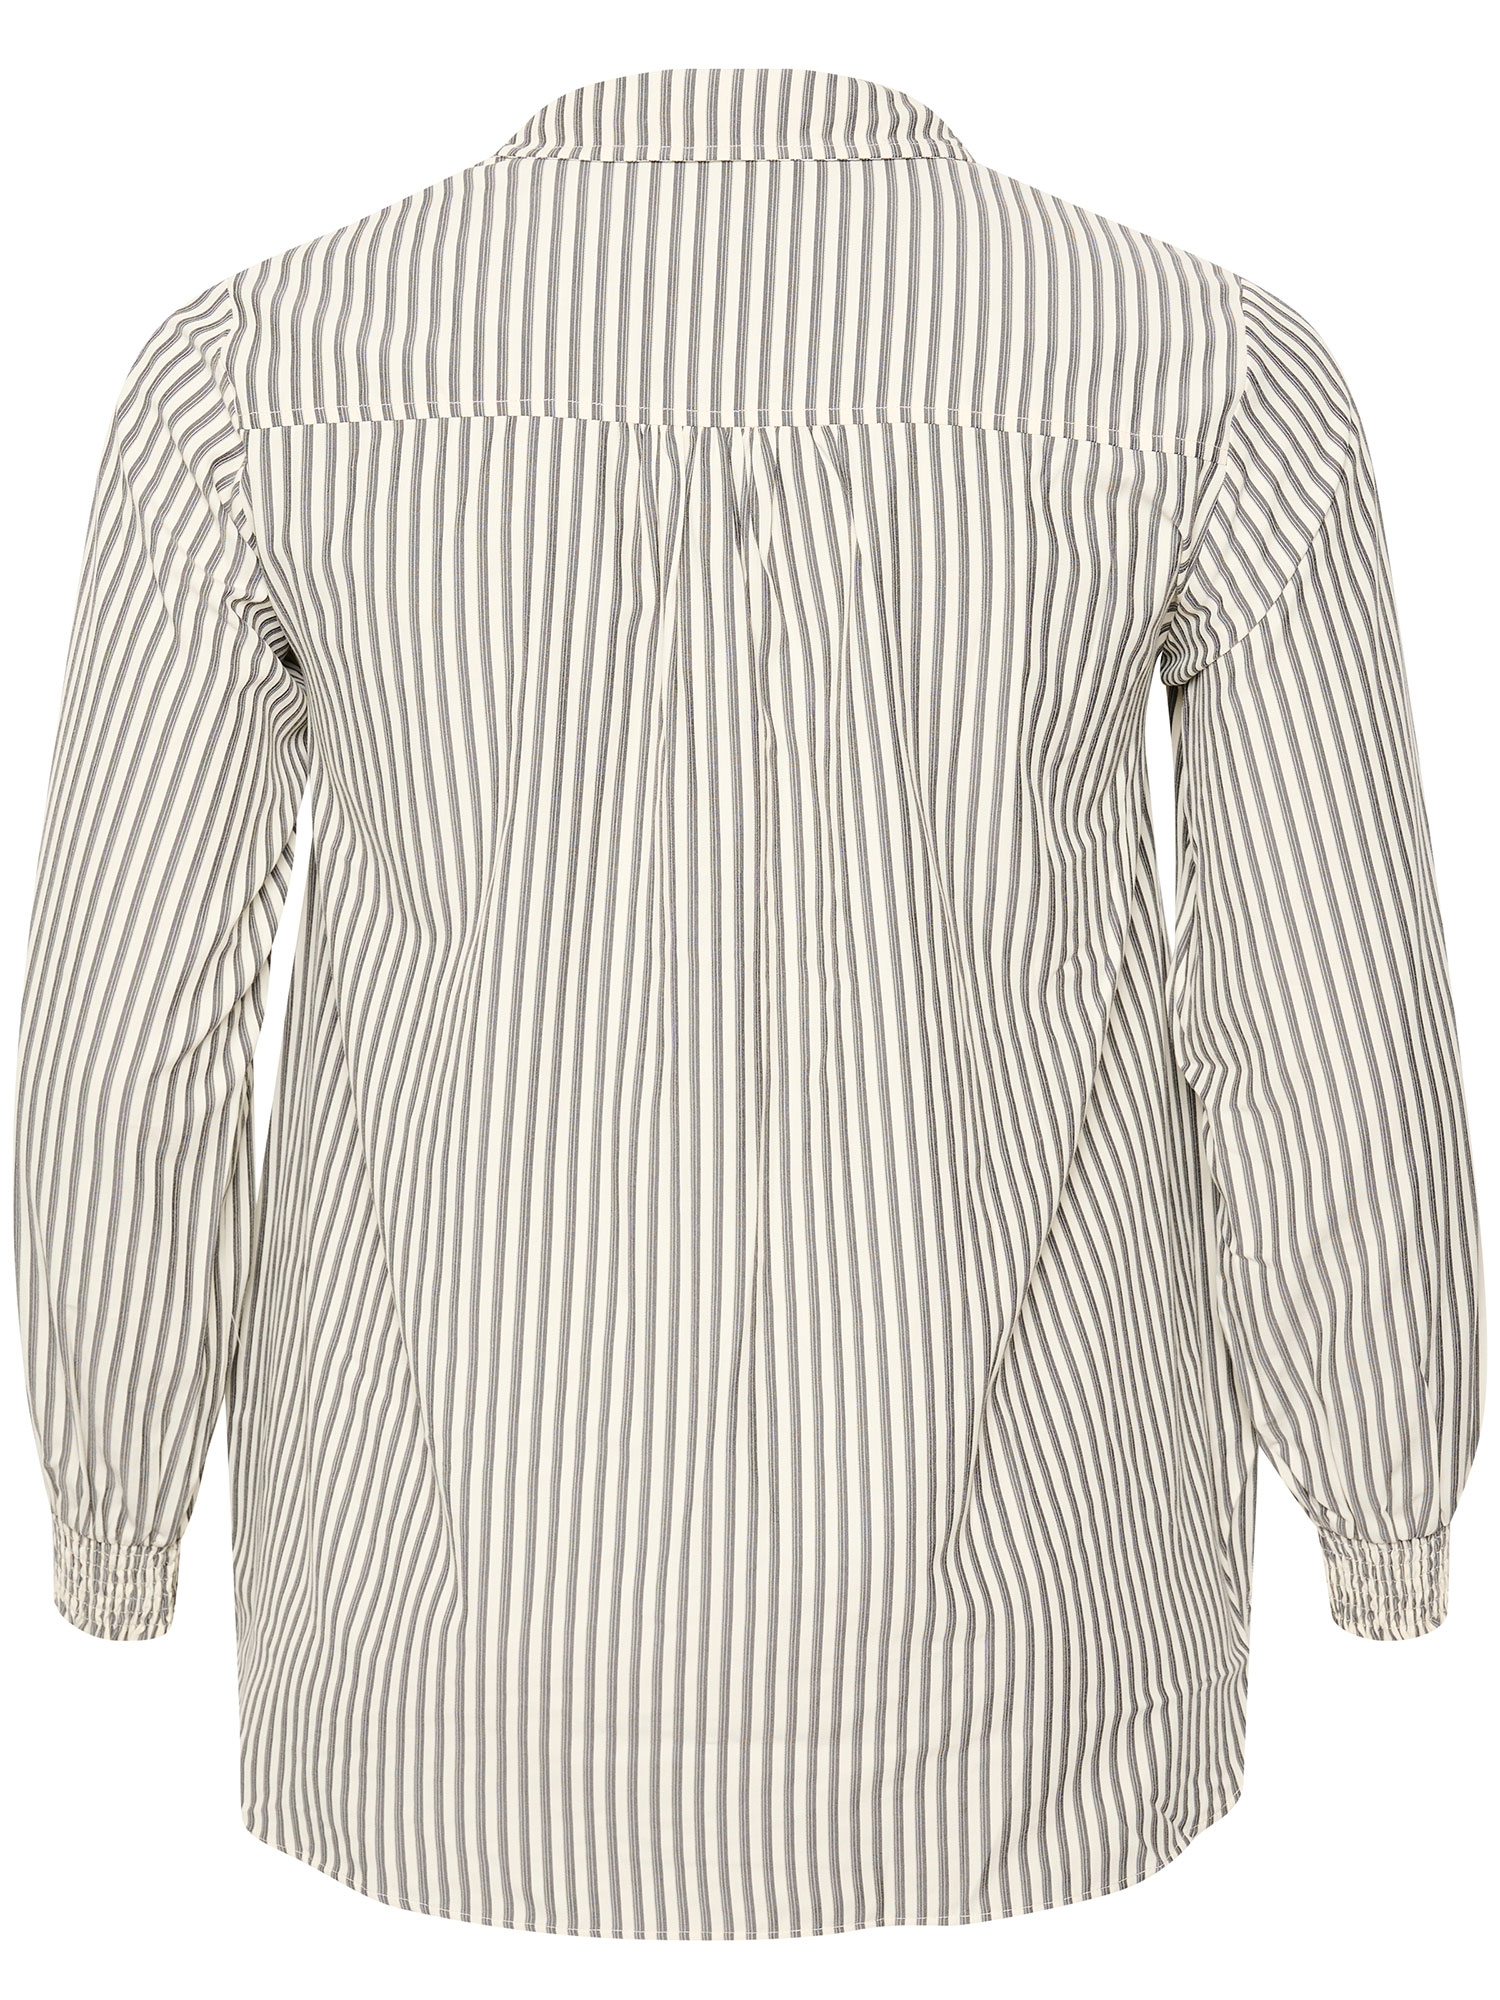 KC LOLINA - Let hvis skjorte med fine grå og sorte striber fra Kaffe Curve